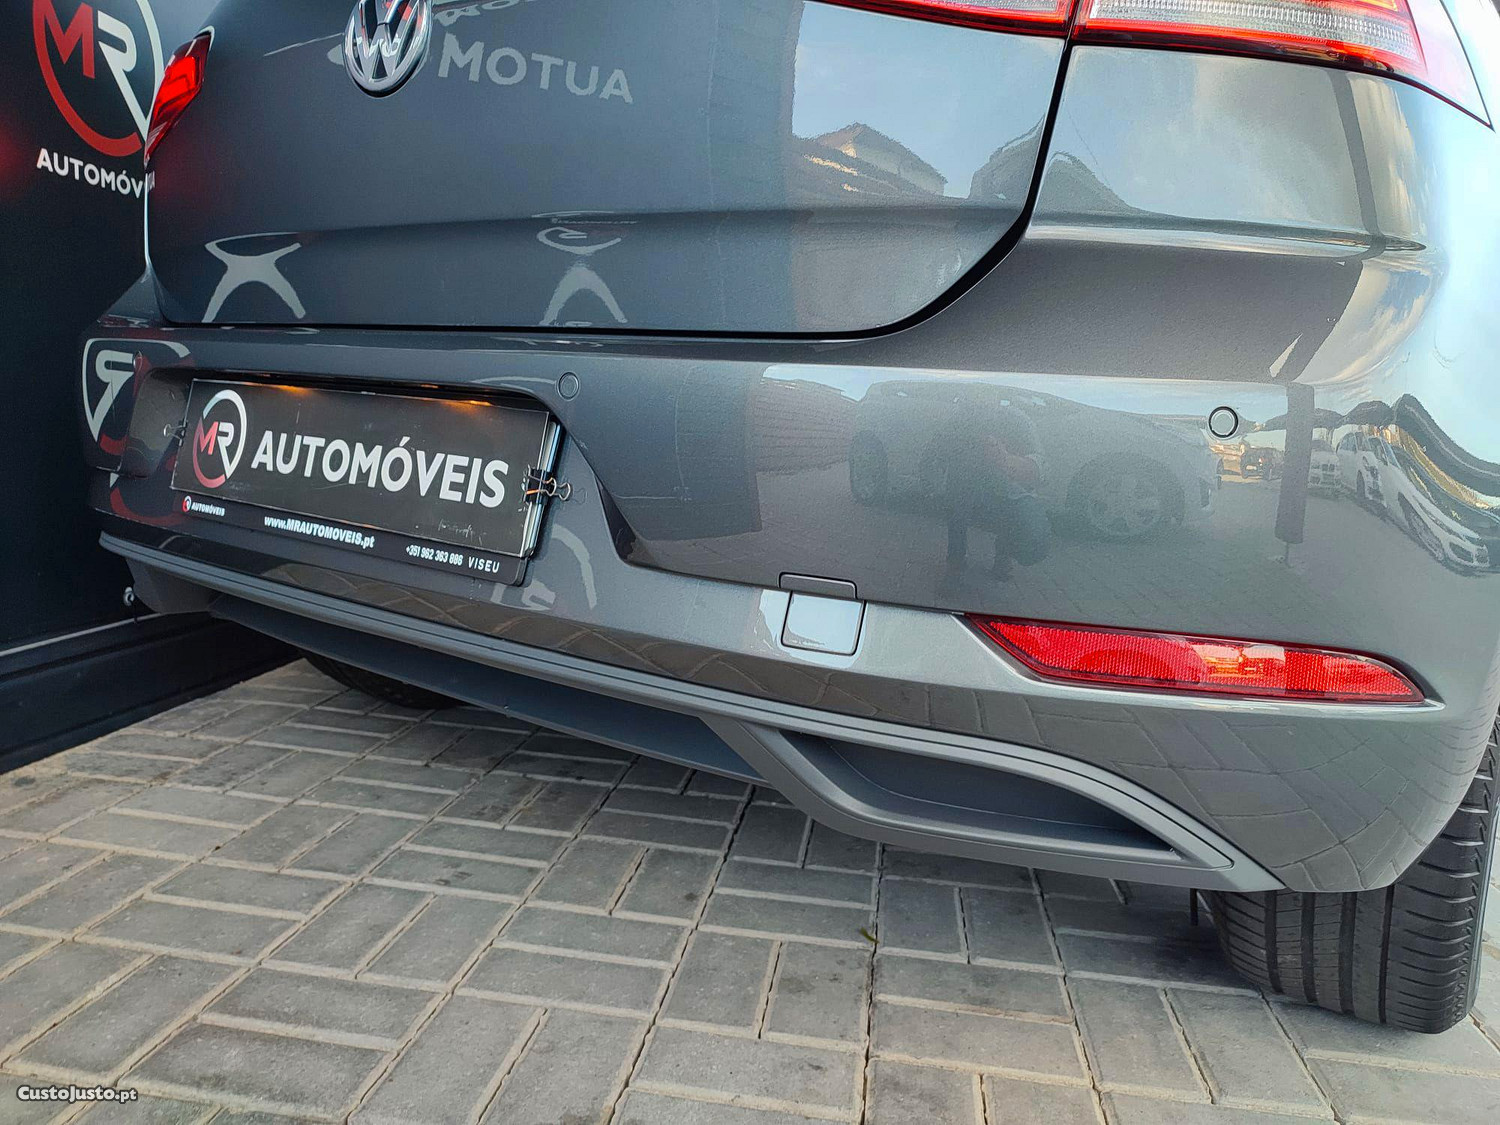 VW Golf 1.6 Tdi Bluemotion Trendline